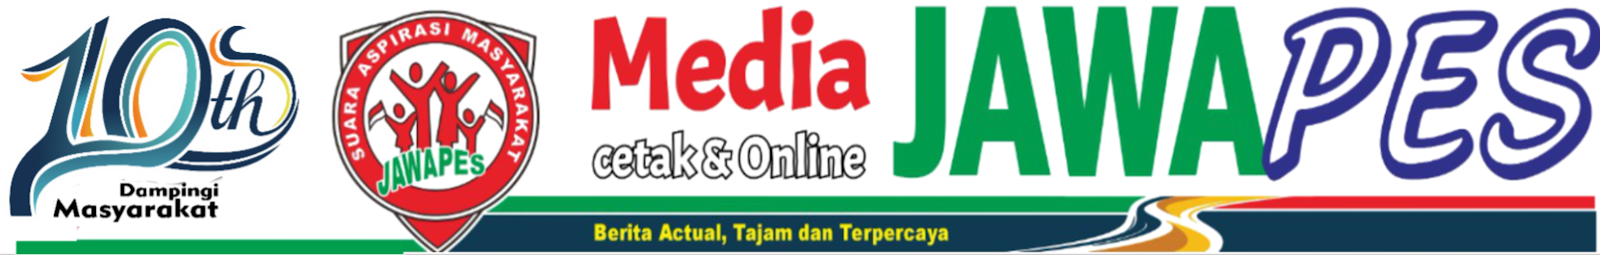 Media Jawapes Indonesia